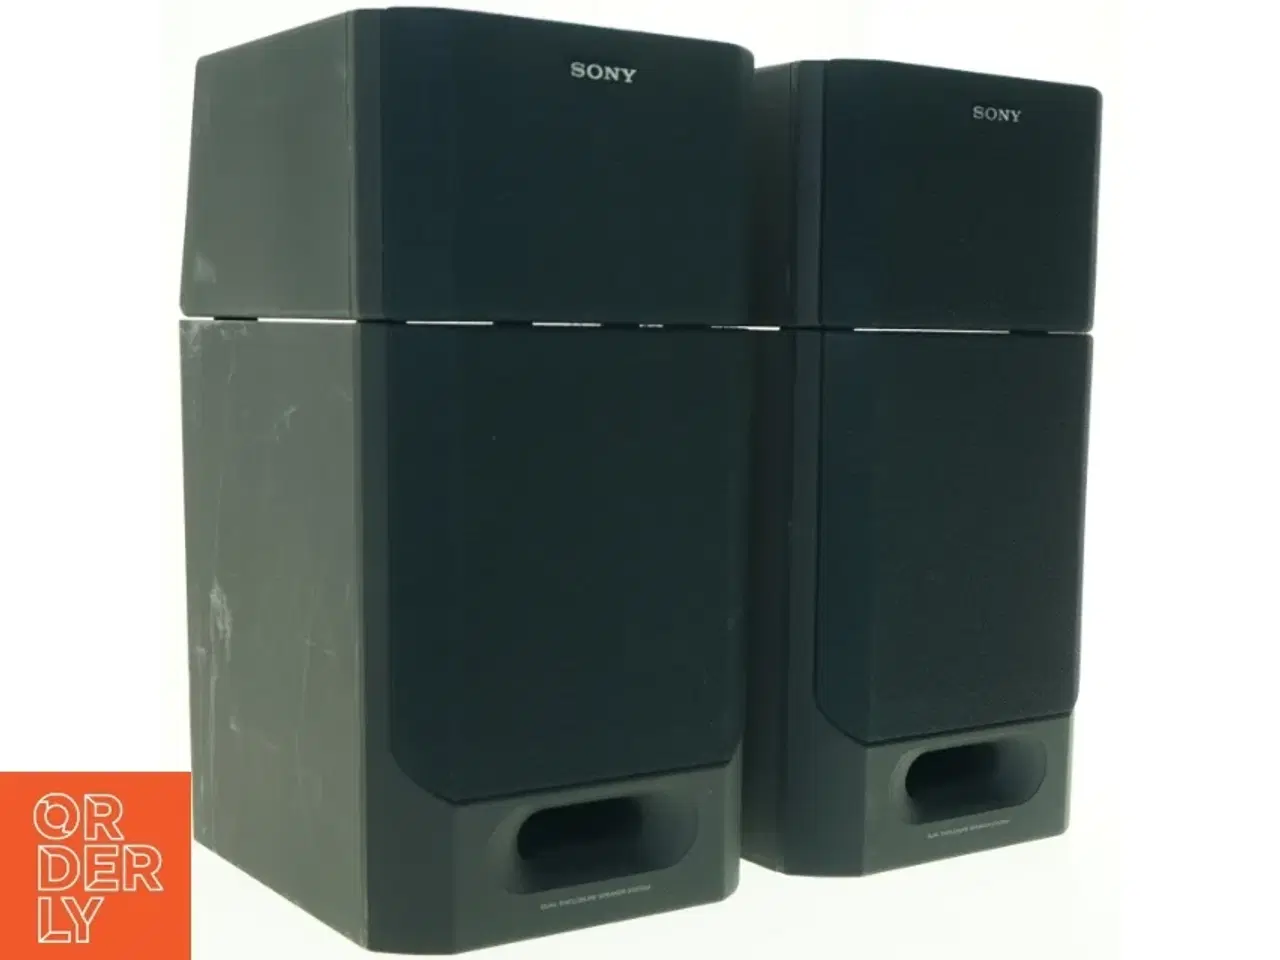 Billede 1 - Sony SS-H3600 Højtalere fra Sony (str. 36 x 18 x 22 cm)